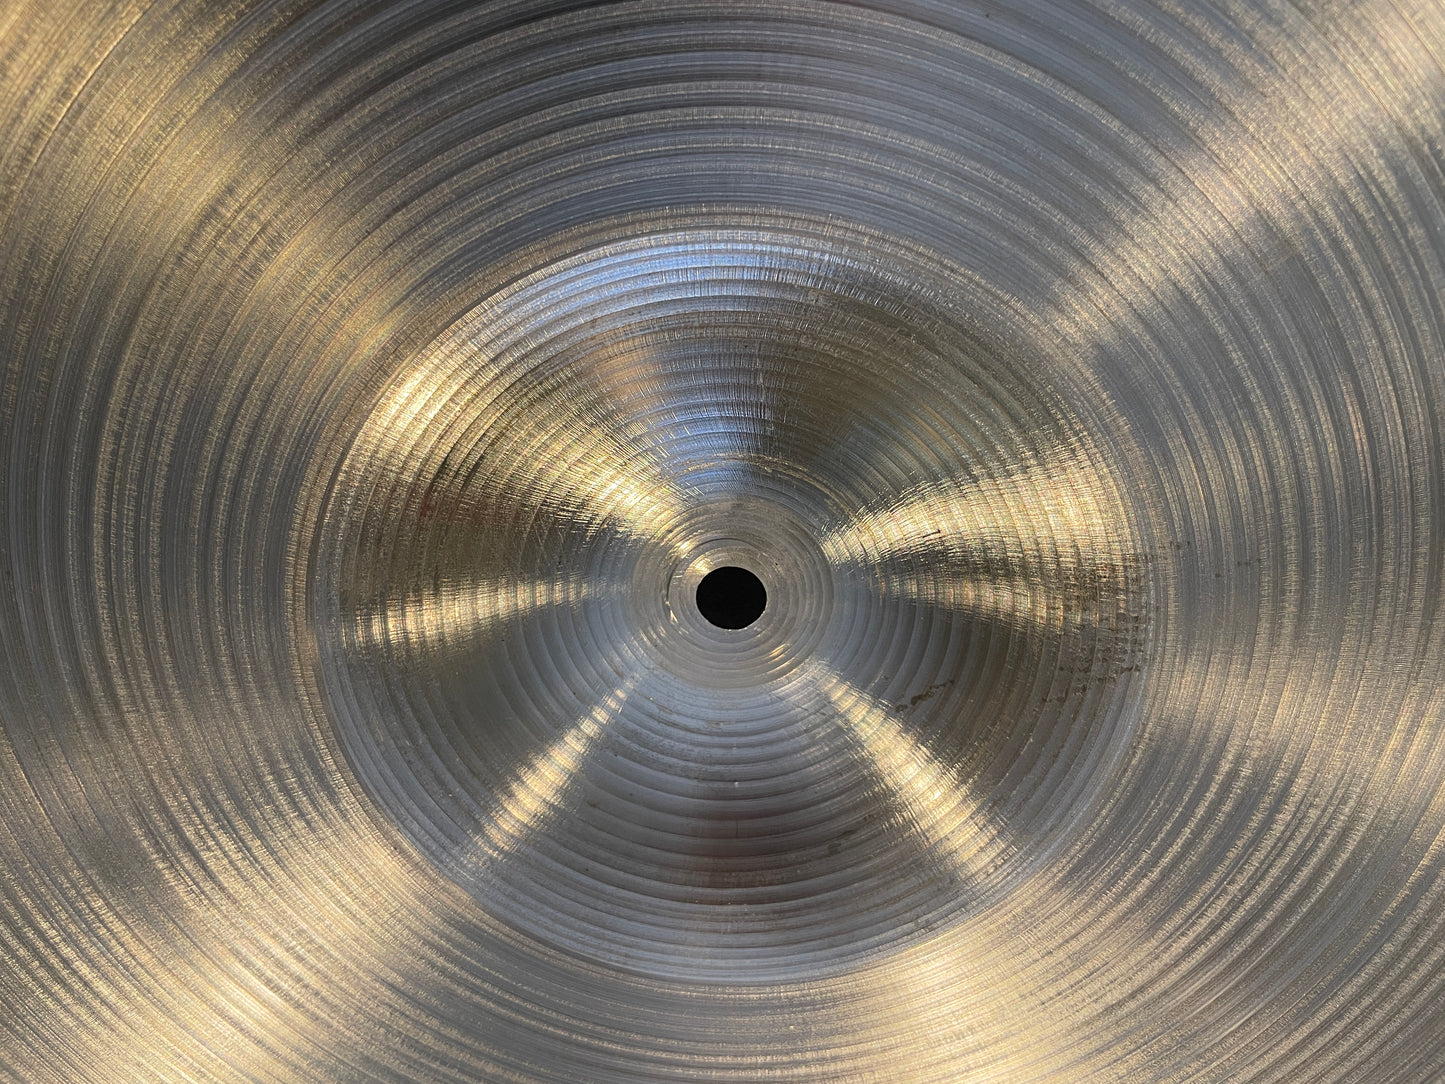 19" Zildjian A Medium Thin Crash Cymbal 1806g